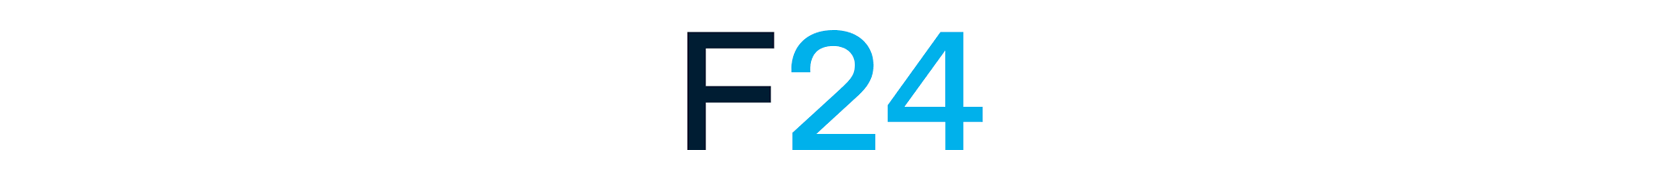 F24 Kundenlogos Banner 2021_.png